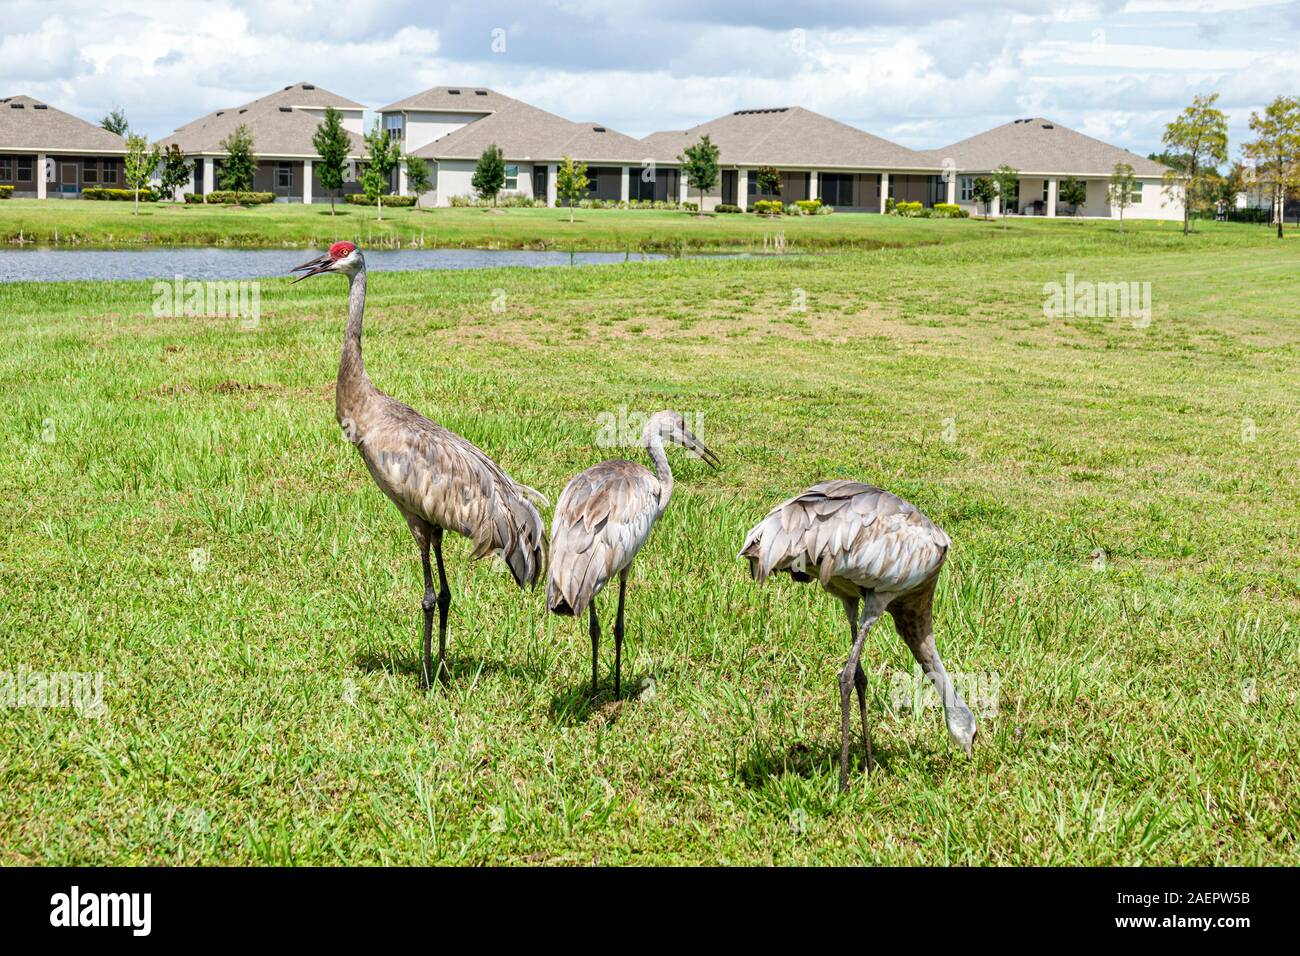 St. Saint Cloud Florida,Harmony,planned community,housing,single family homes,sandhill crane,Antigone canadensis,migratory bird,FL190920084 Stock Photo